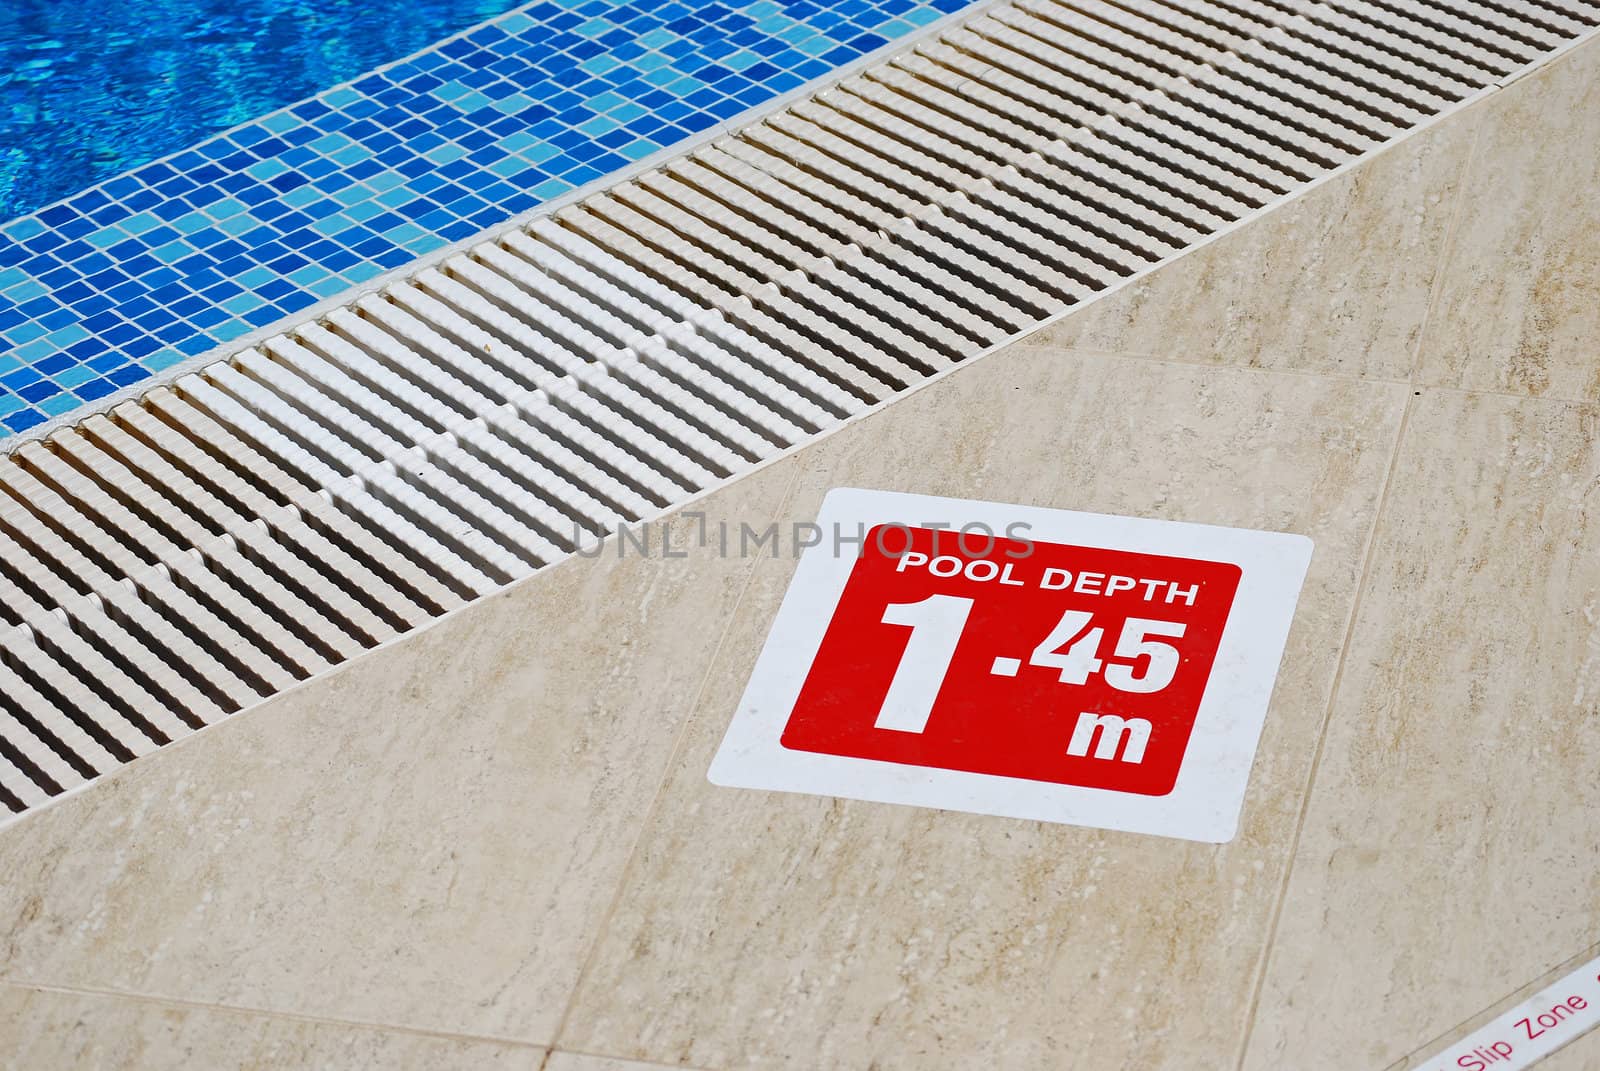 Red pool depth sign, water, overflow drain